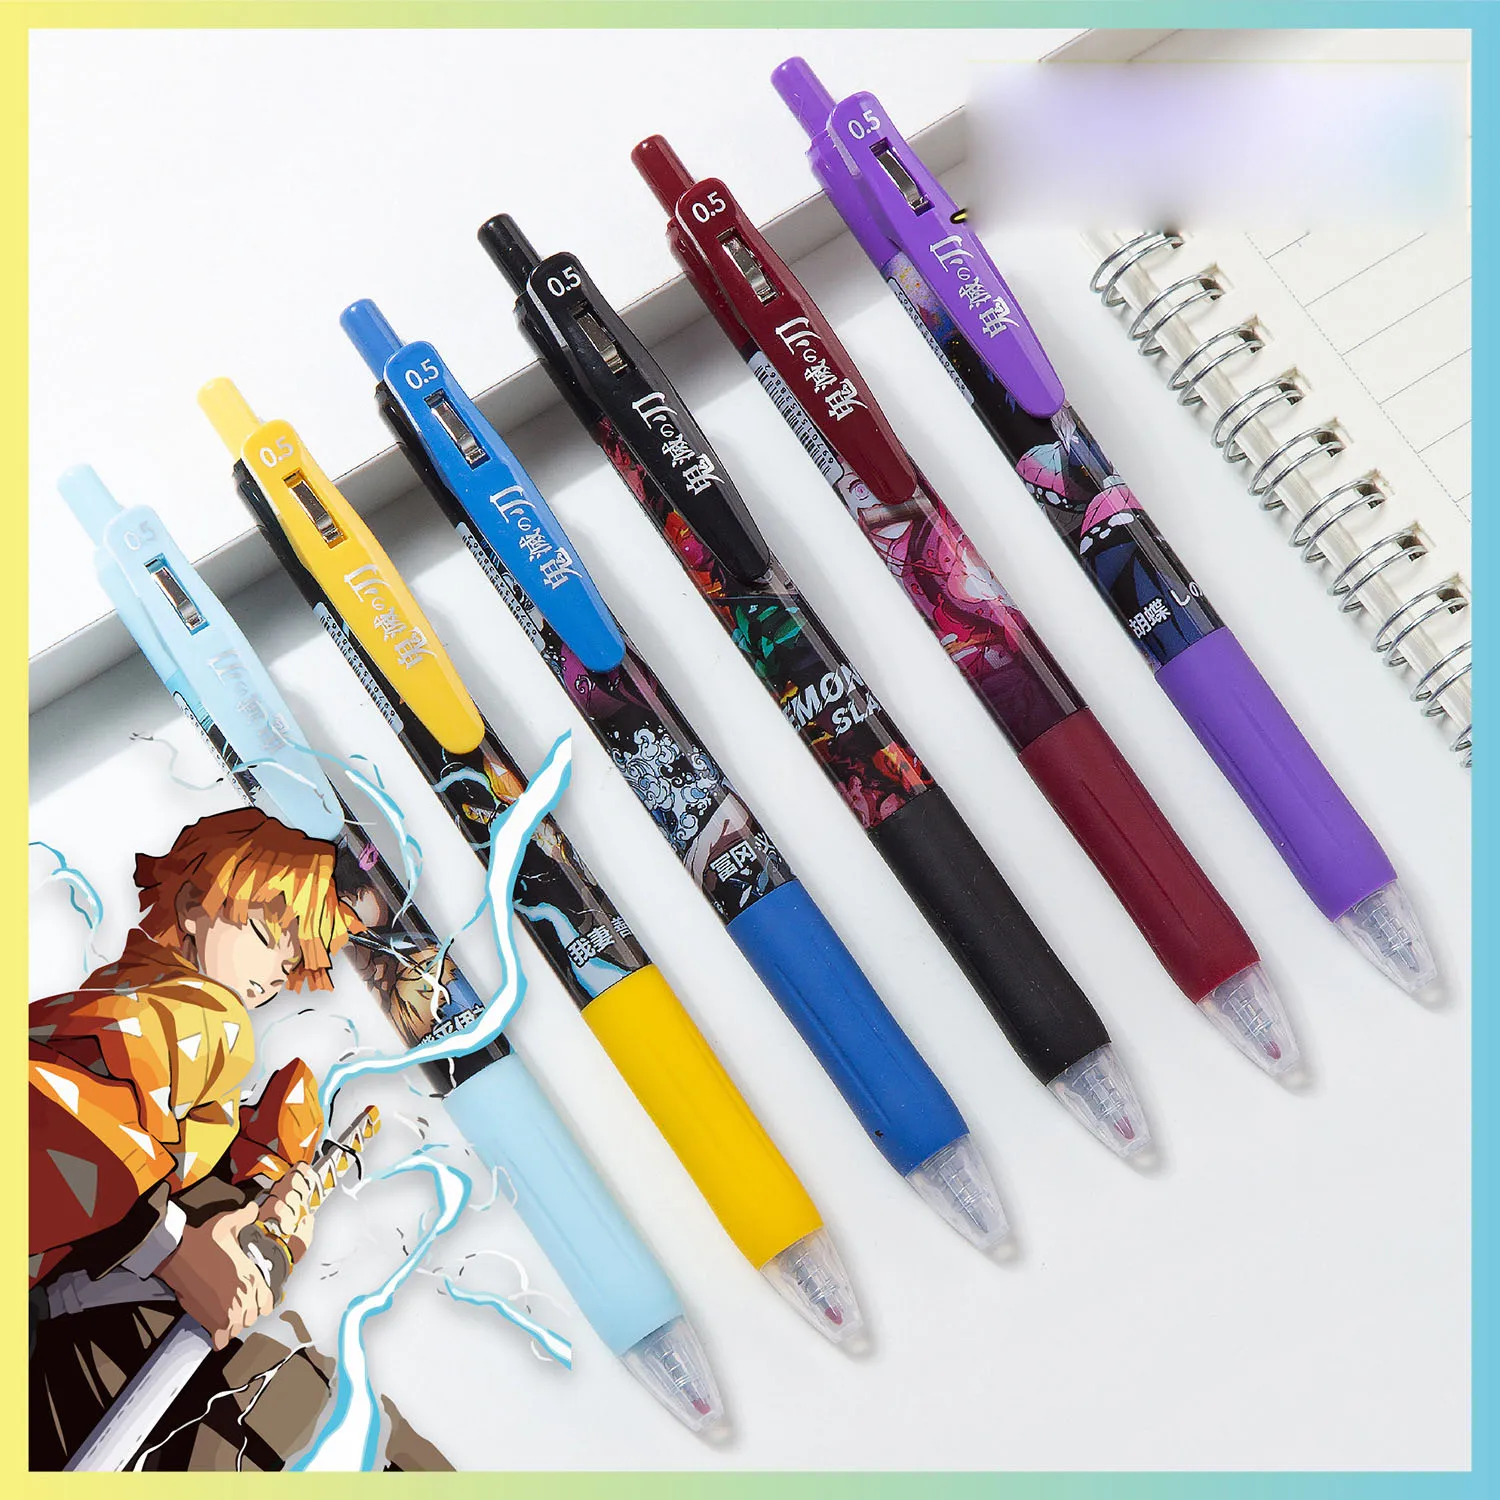 

36 pcs/lot Demon Slayer Press Gel Pen Cute 0.5mm Black Ink Signature Pens Promotional Gift For kids Stationery School Supplies